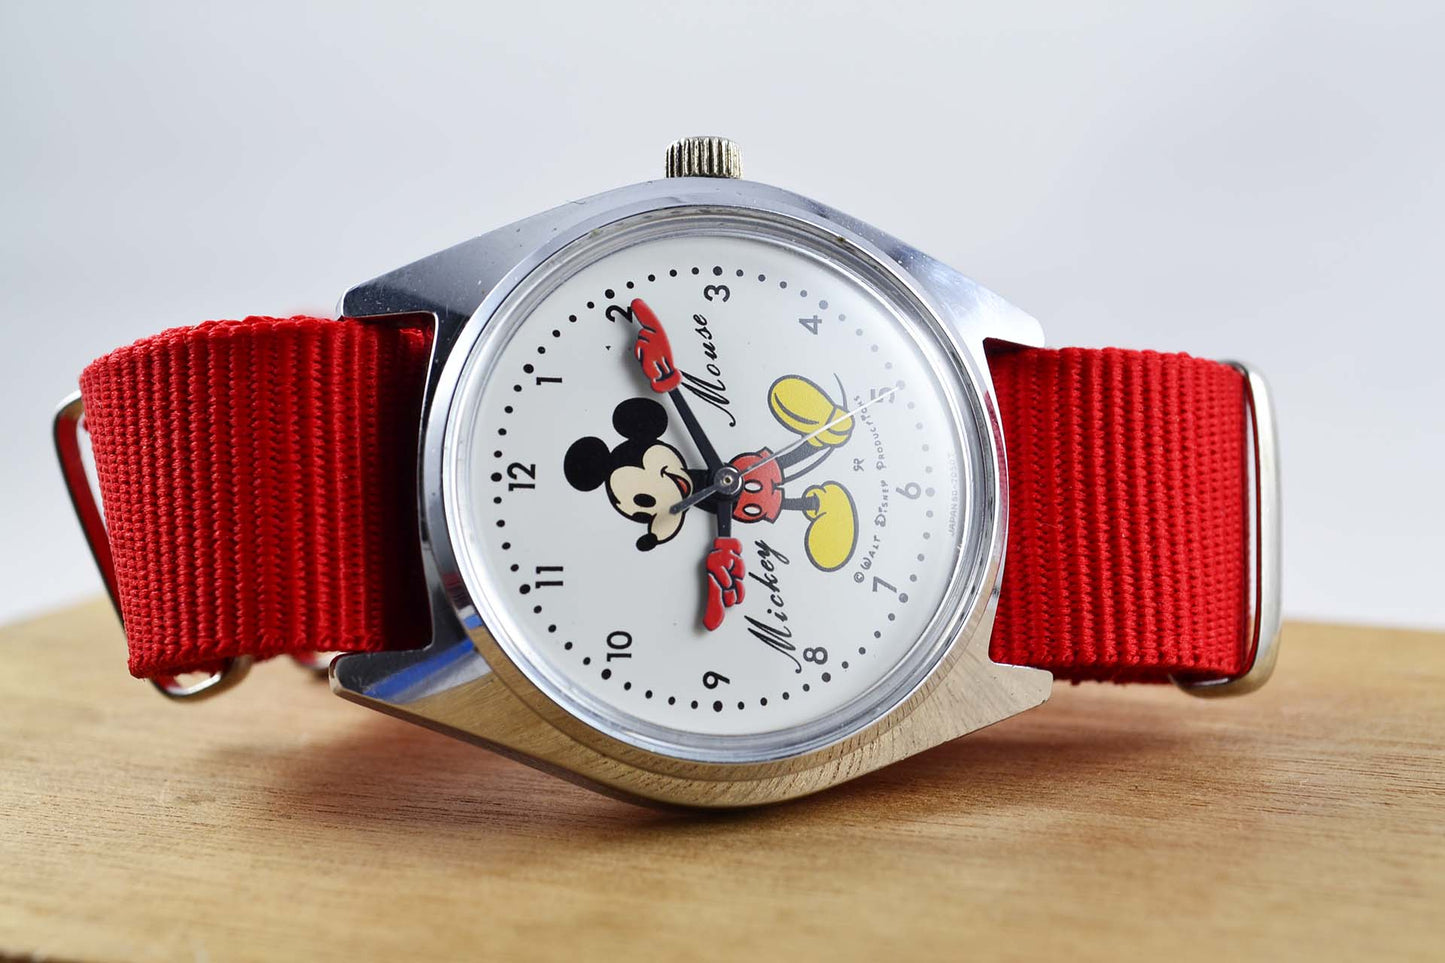 Seiko Mickey Mouse Walt Disney vers 1970 mécanique - LumeVille